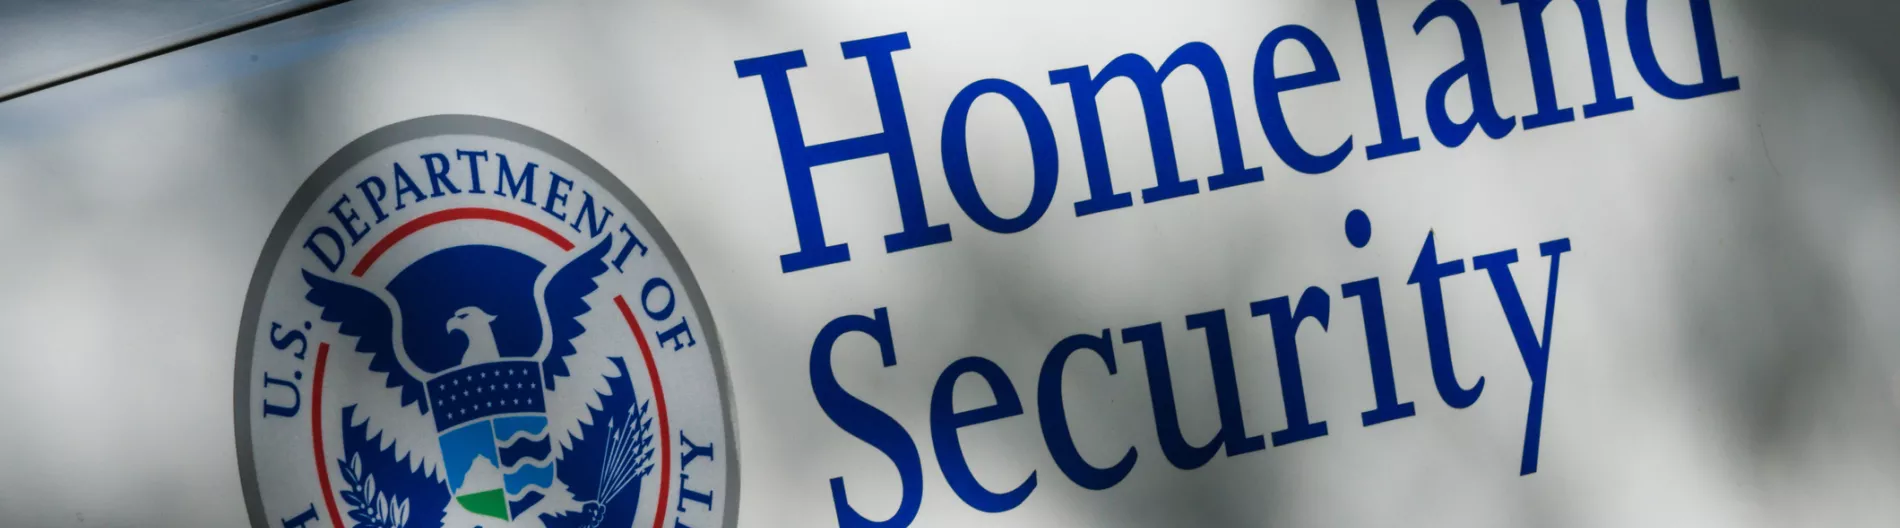 Homeland Security Sign